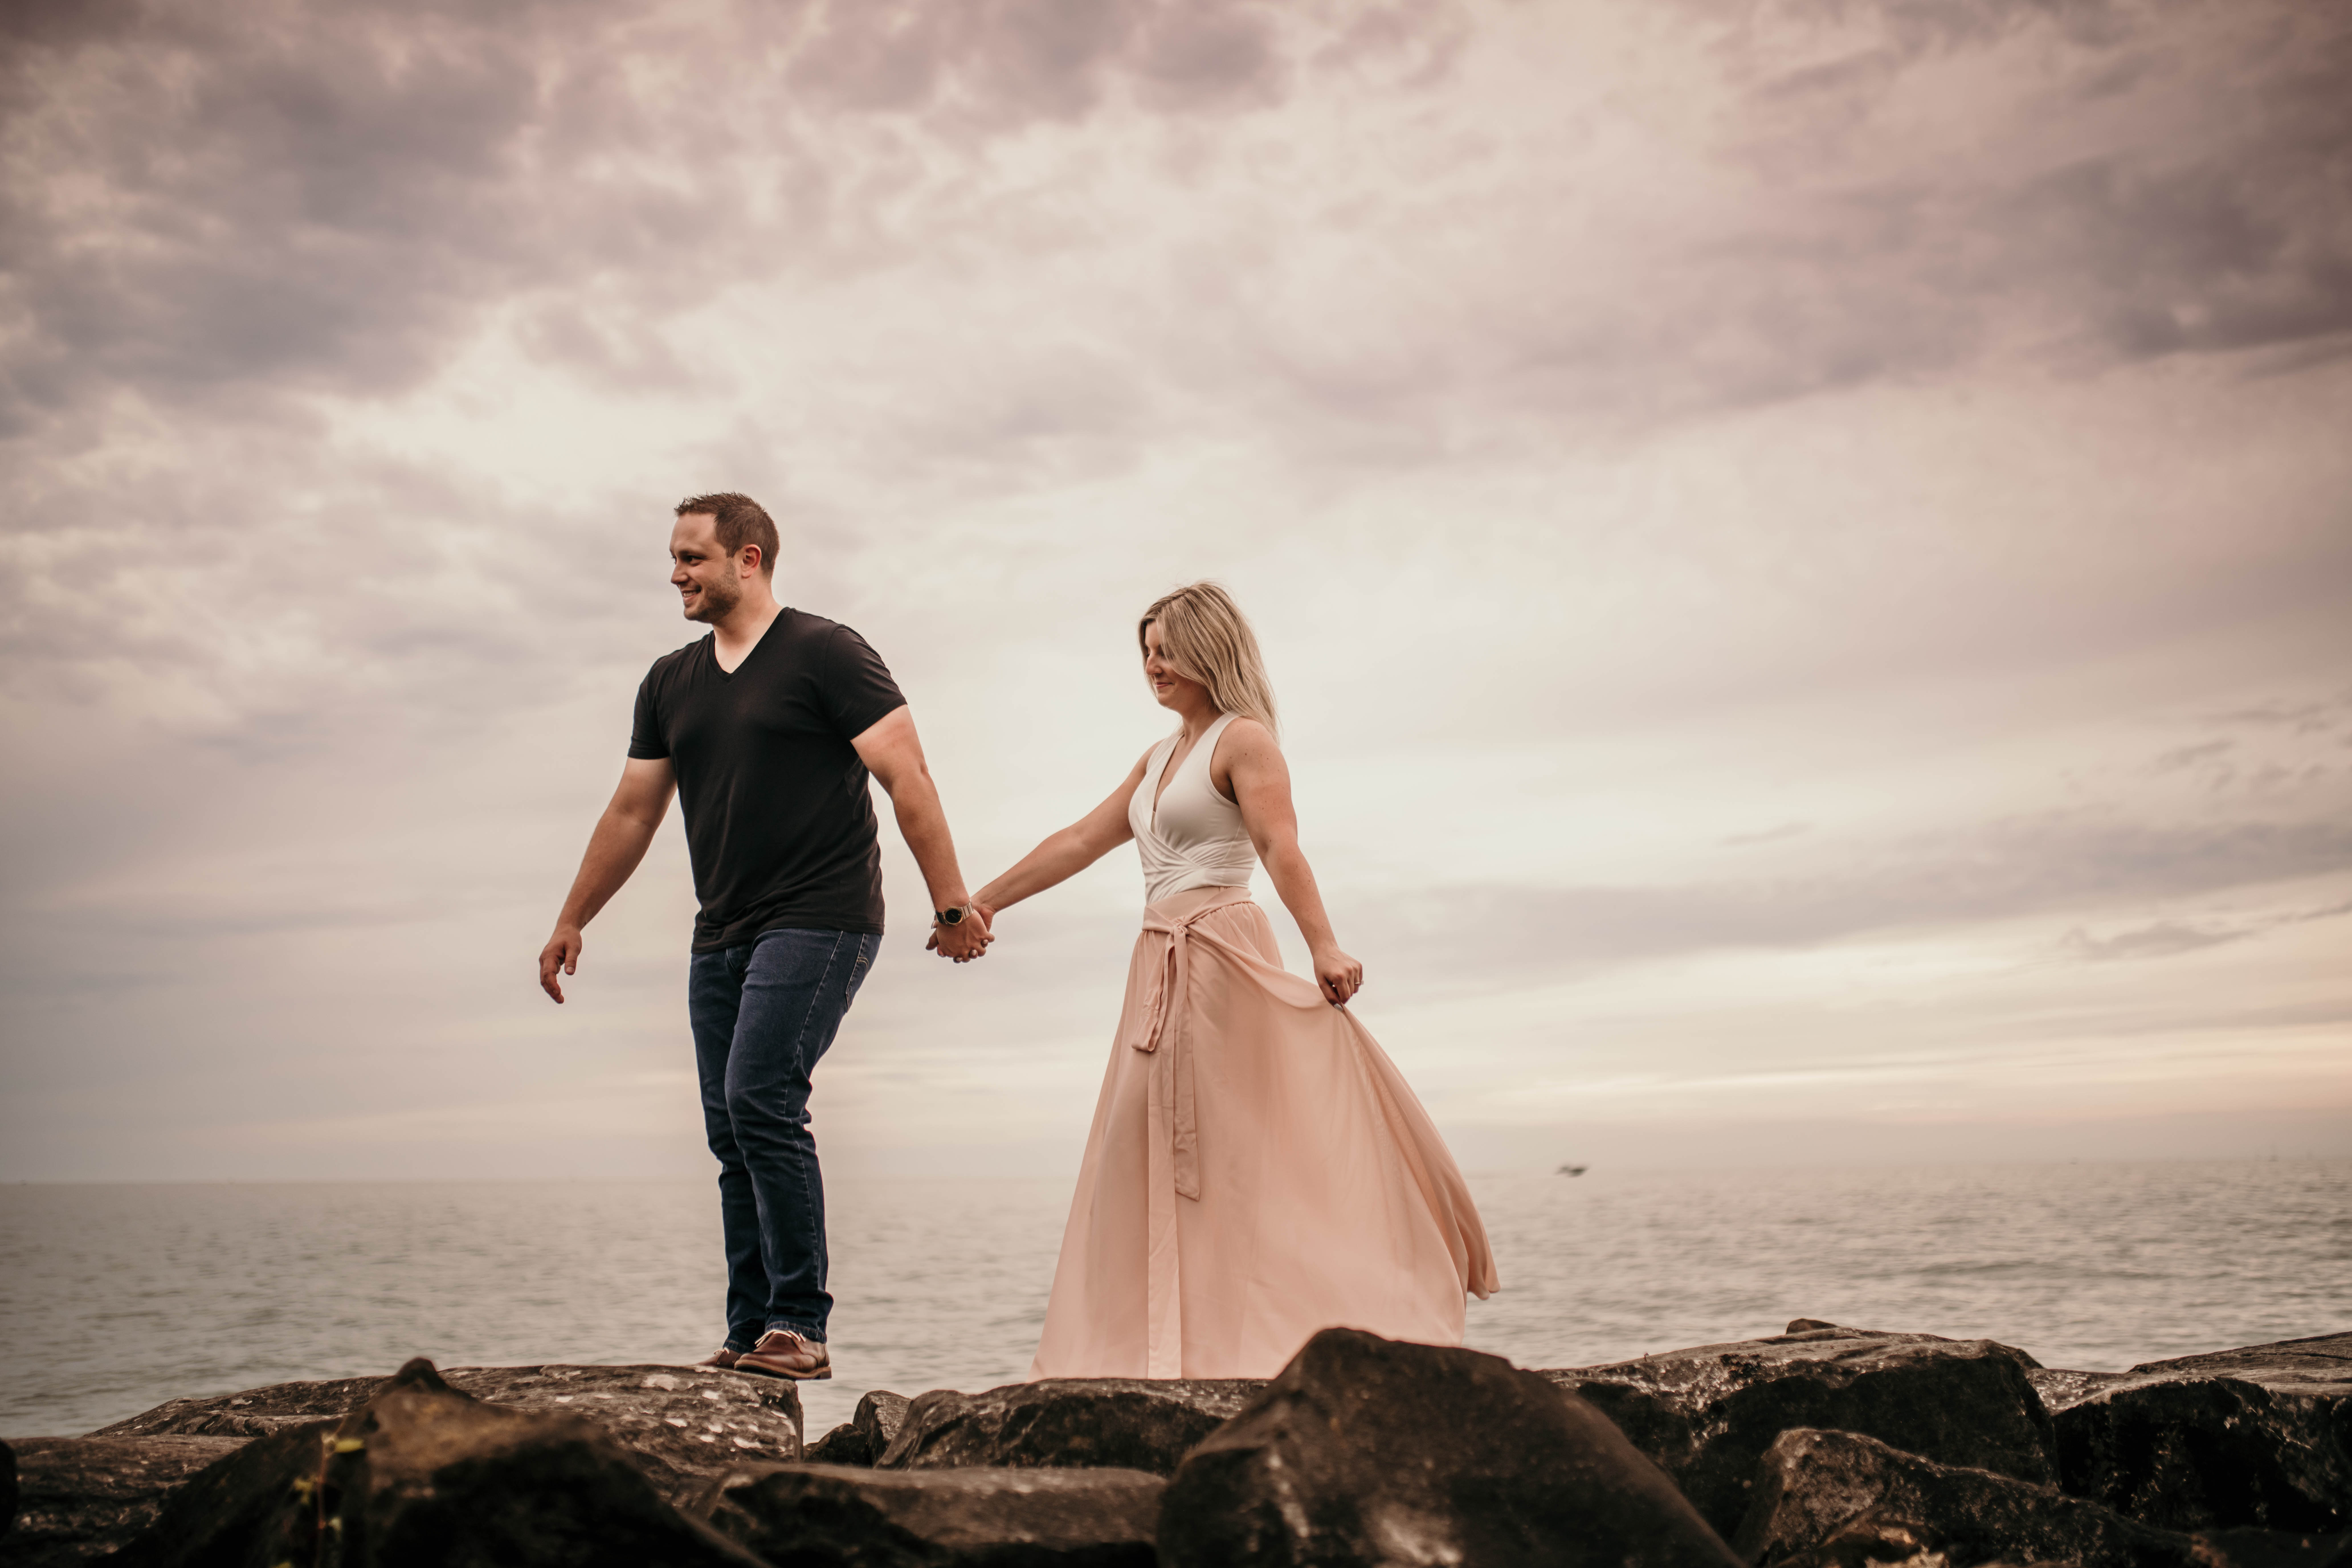 couple walking on rocks by water. woman wearing long flowy boho pink skirt. man wearing black simple shirt. warm tone engagement portrait photo.